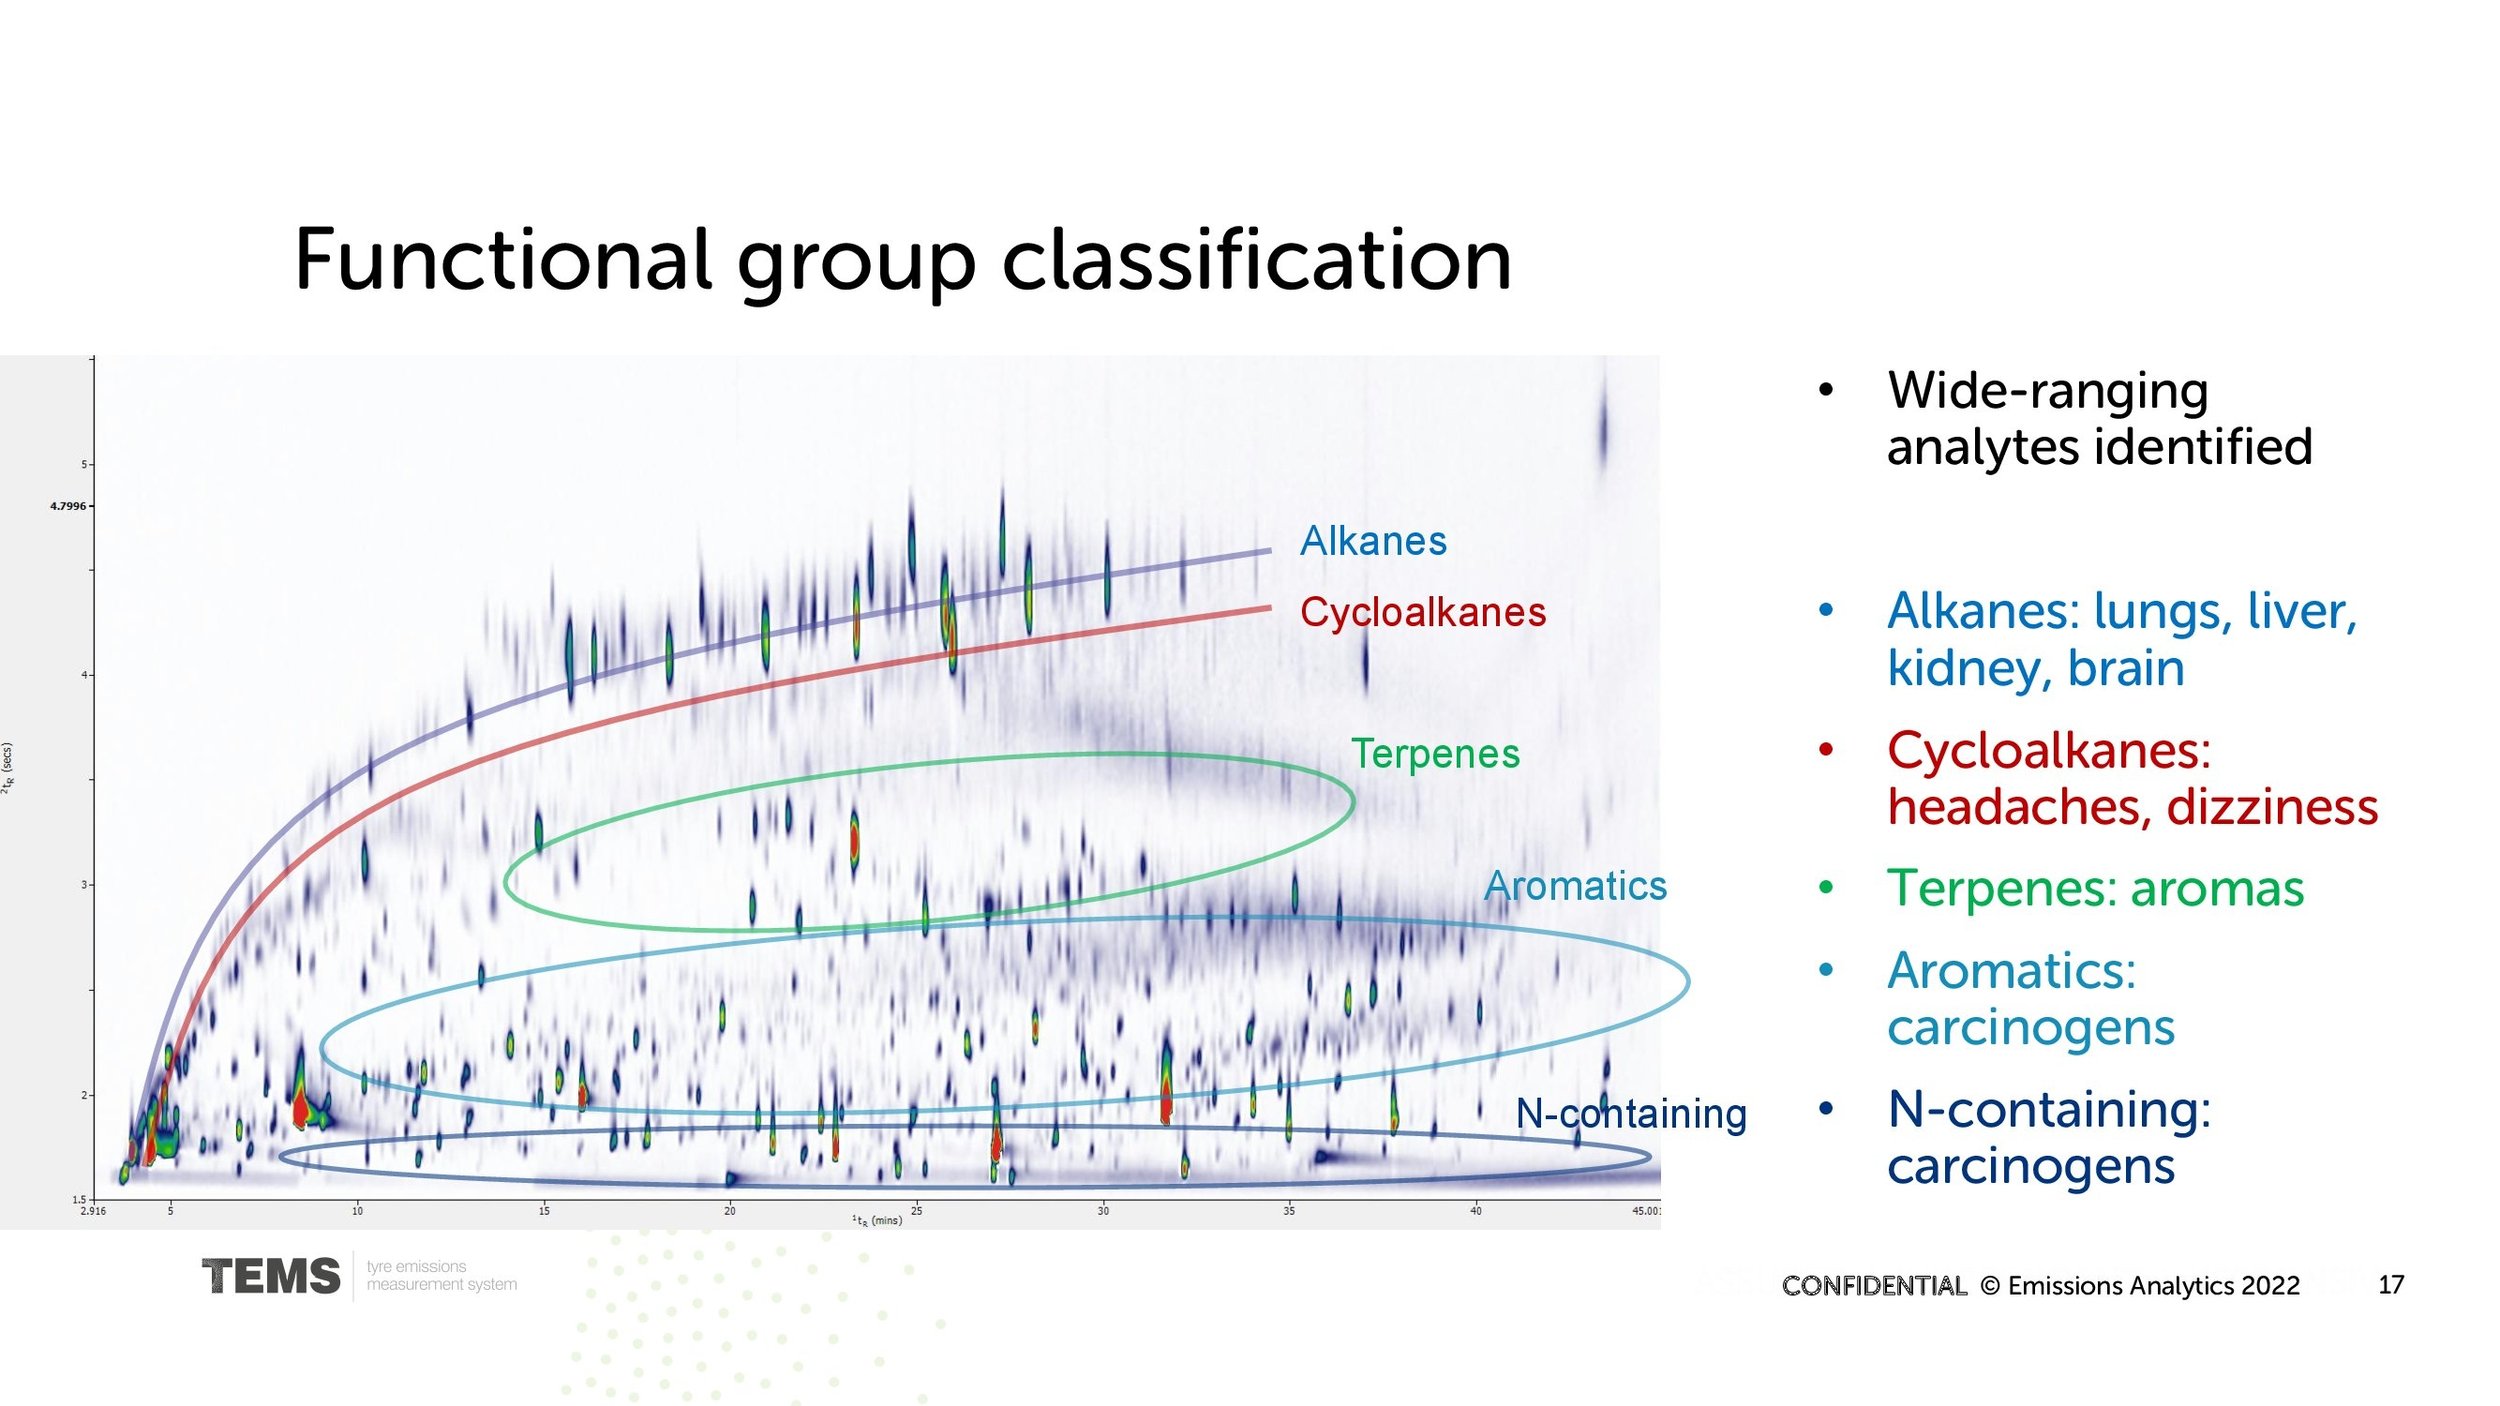 Emissions Analytics CRC tires presentation 16 March 2022_00017.jpg